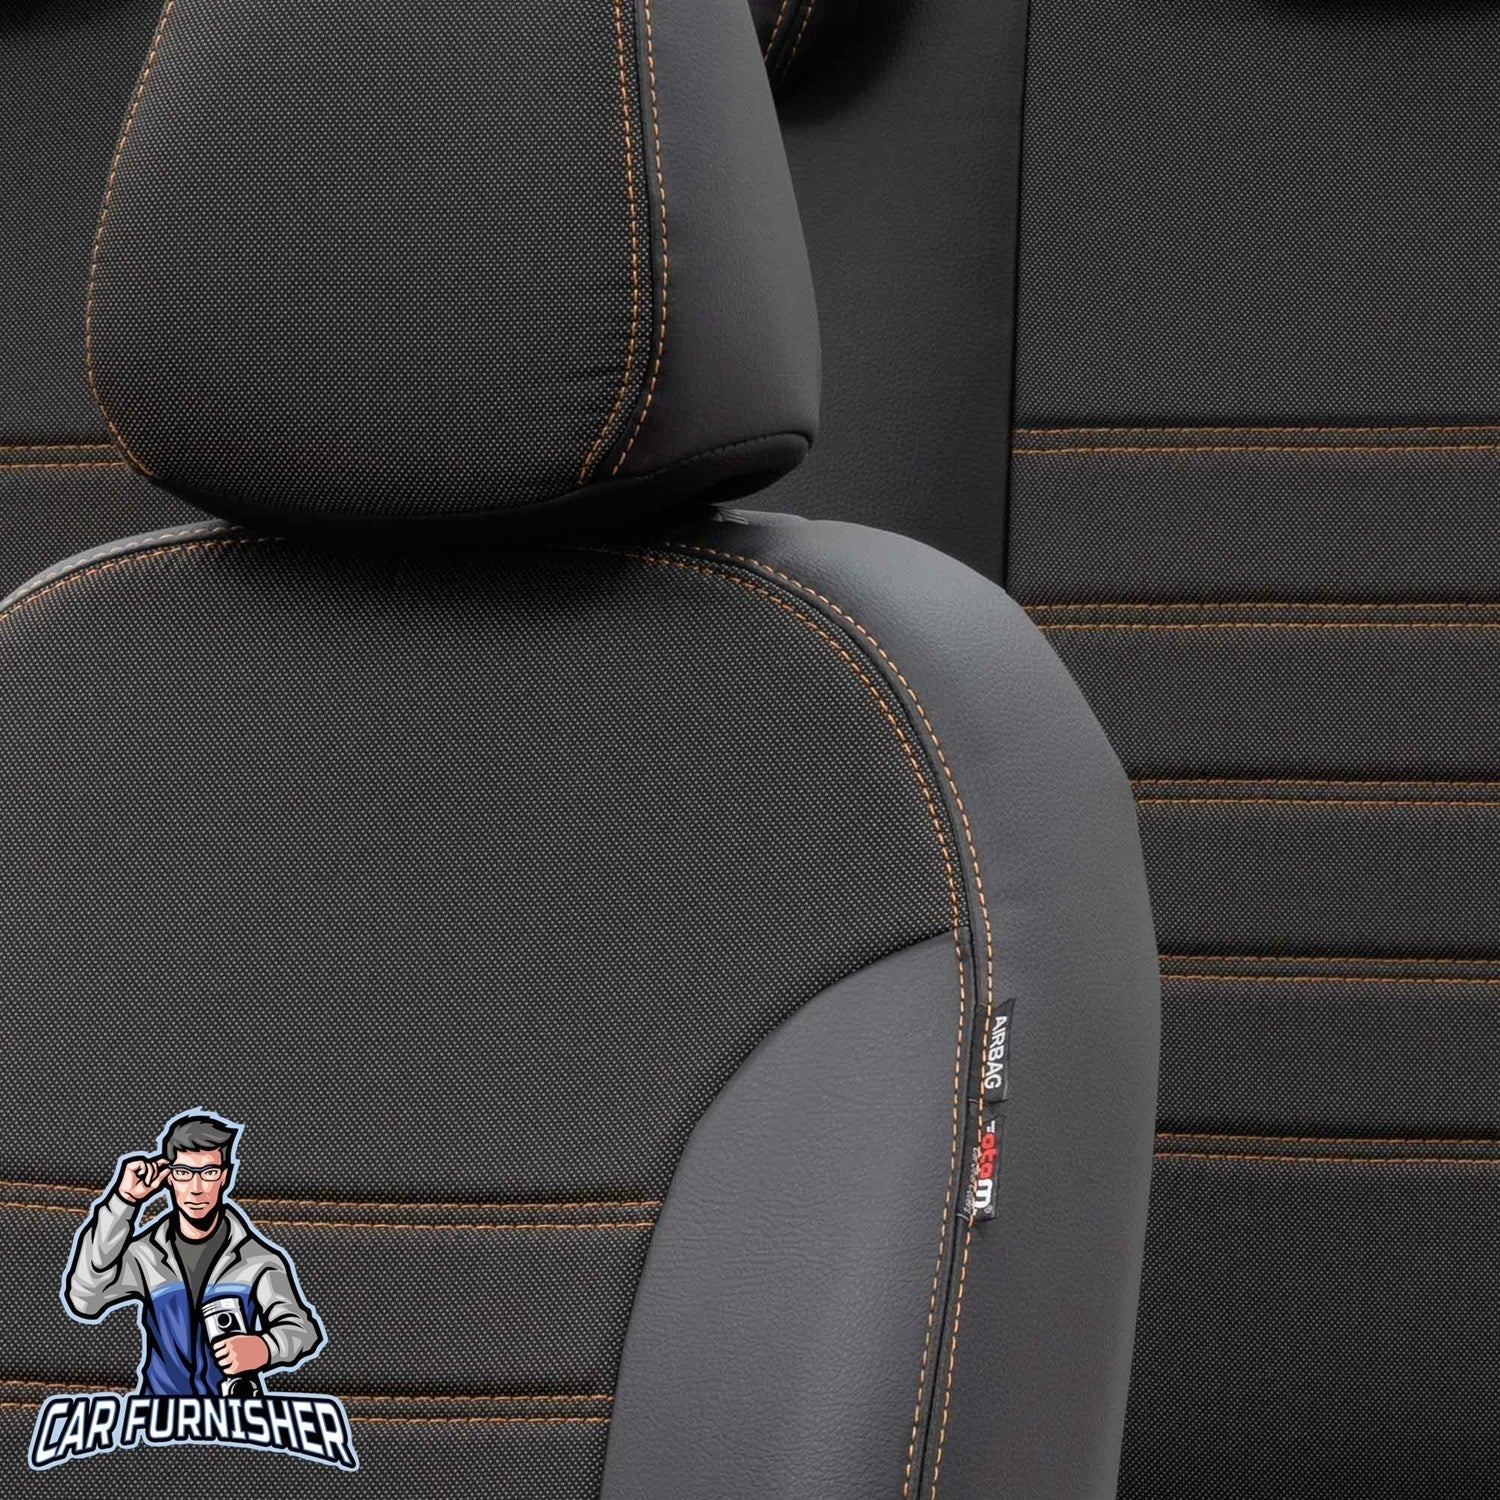 Audi A4 Seat Cover Paris Leather & Jacquard Design Dark Beige Leather & Jacquard Fabric